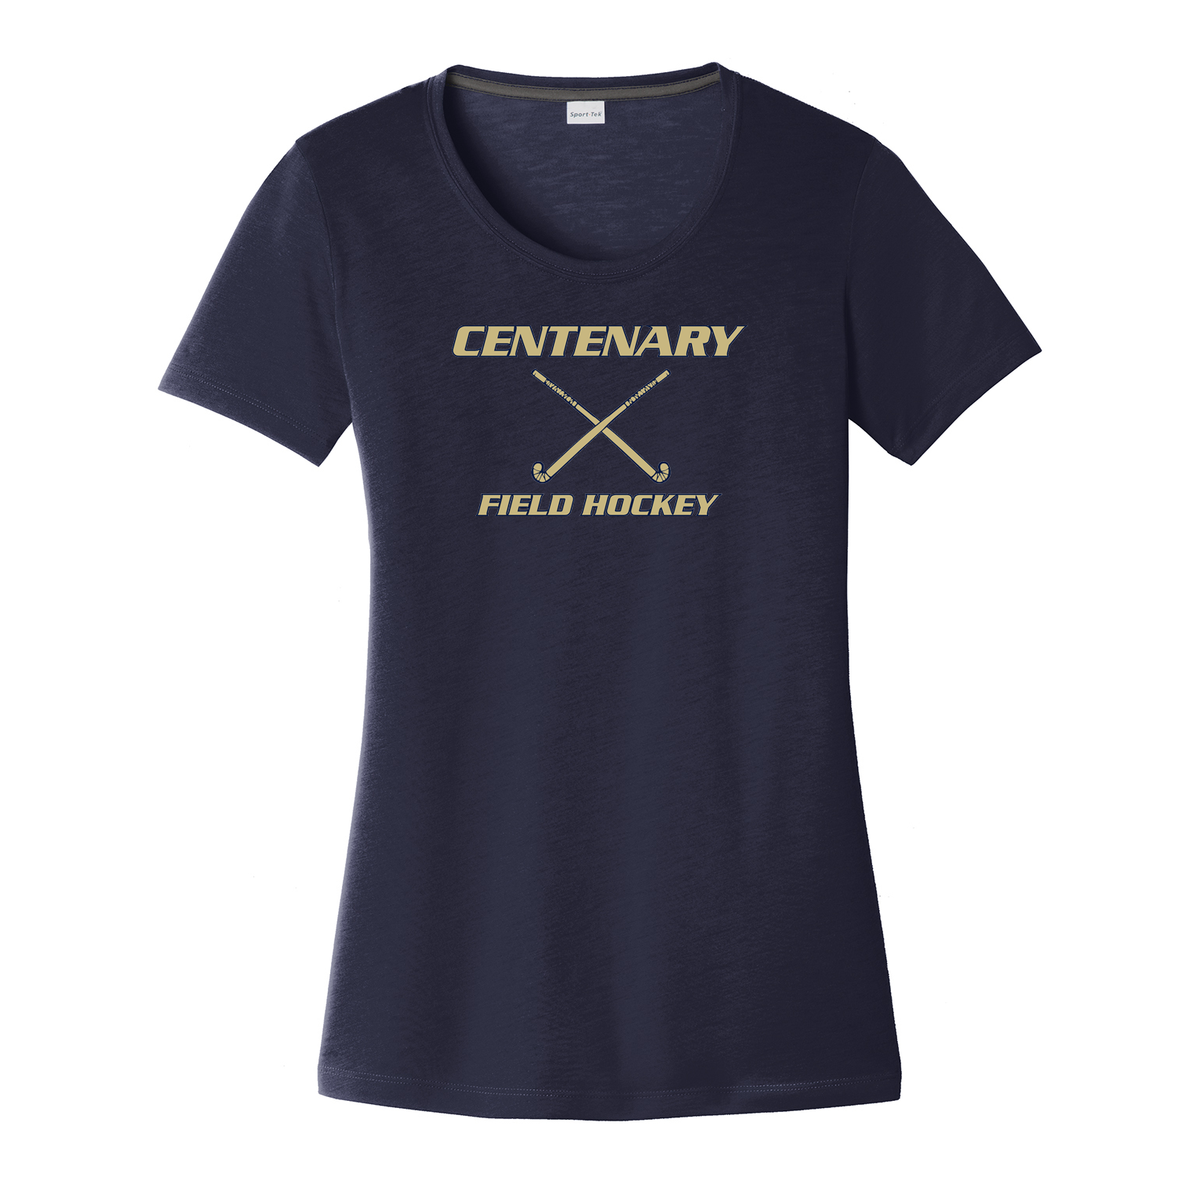 Centenary University Field Hockey Women's CottonTouch Performance T-Shirt